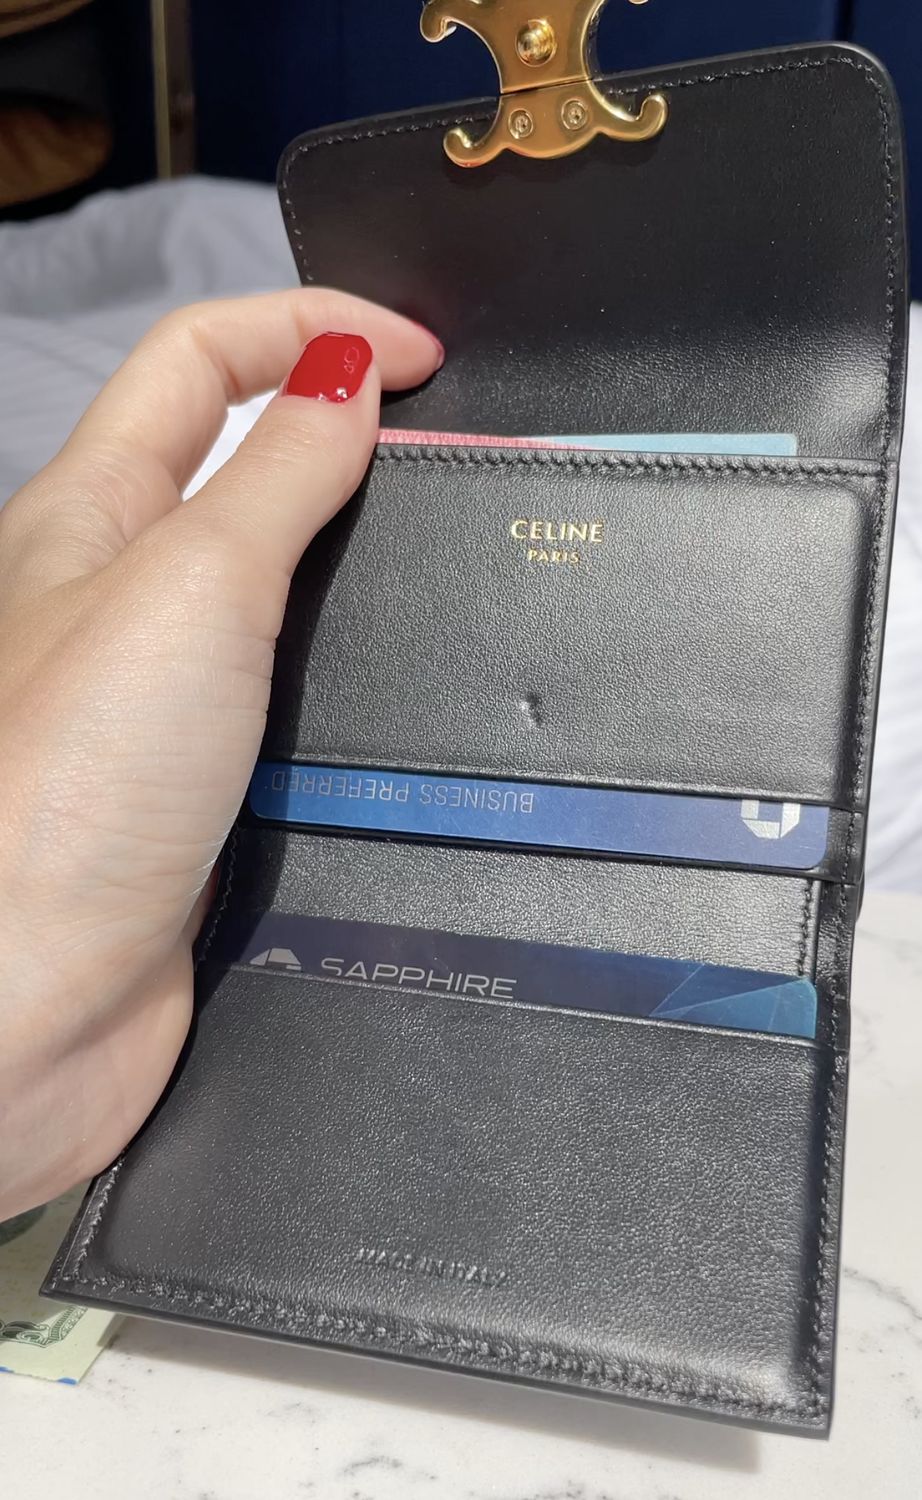 Celine wallet review fragile leather